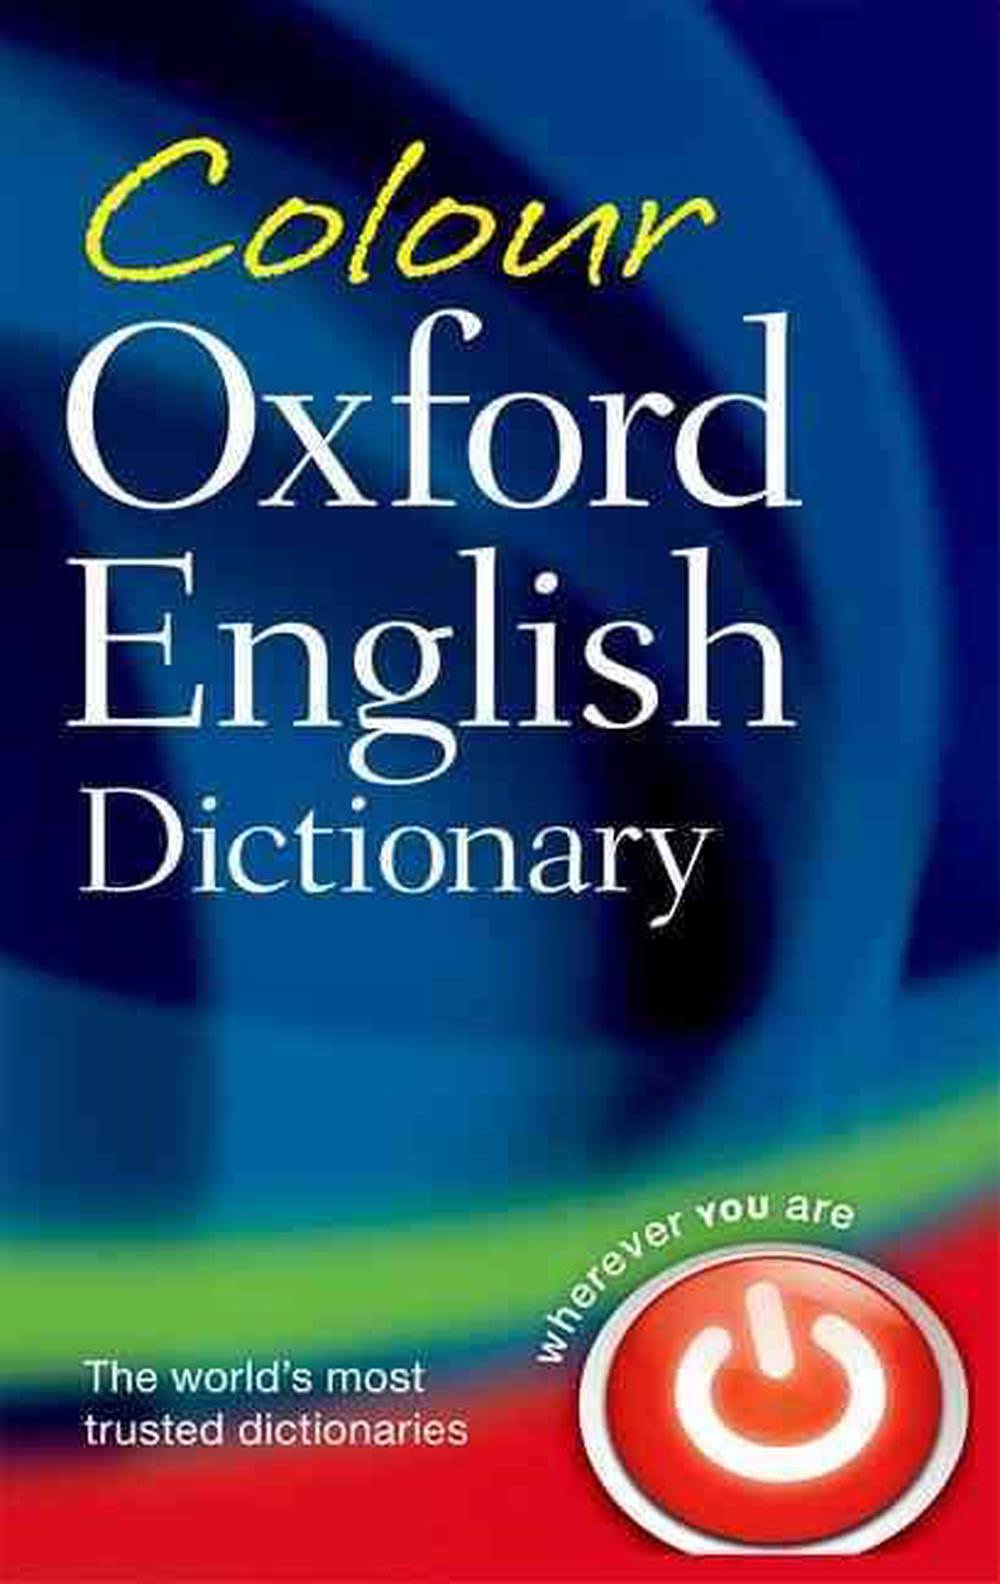 Colour Oxford English Dictionary [Book]